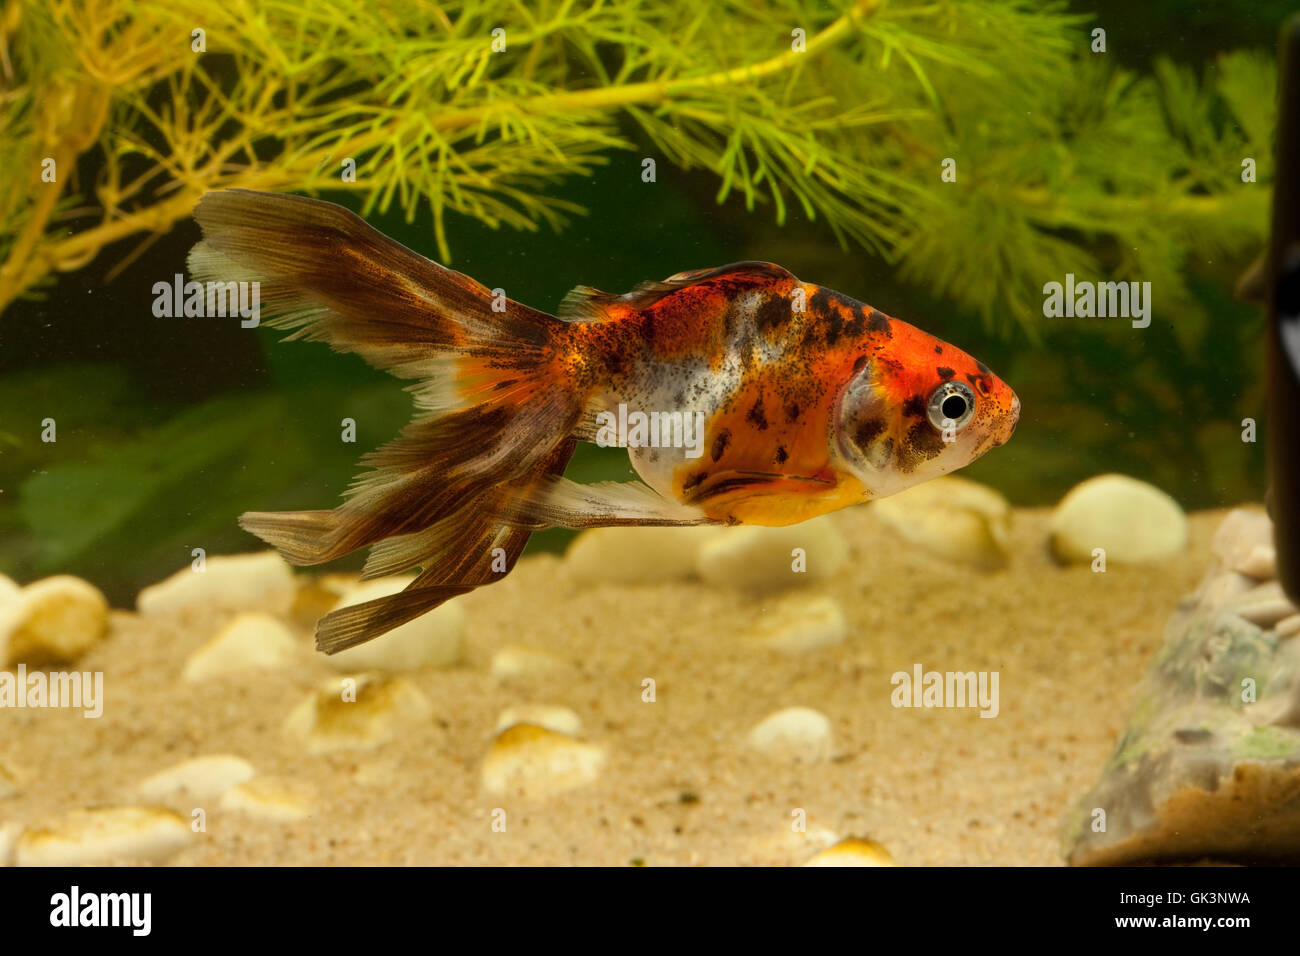 goldfish carp (cyprinidae) Stock Photo